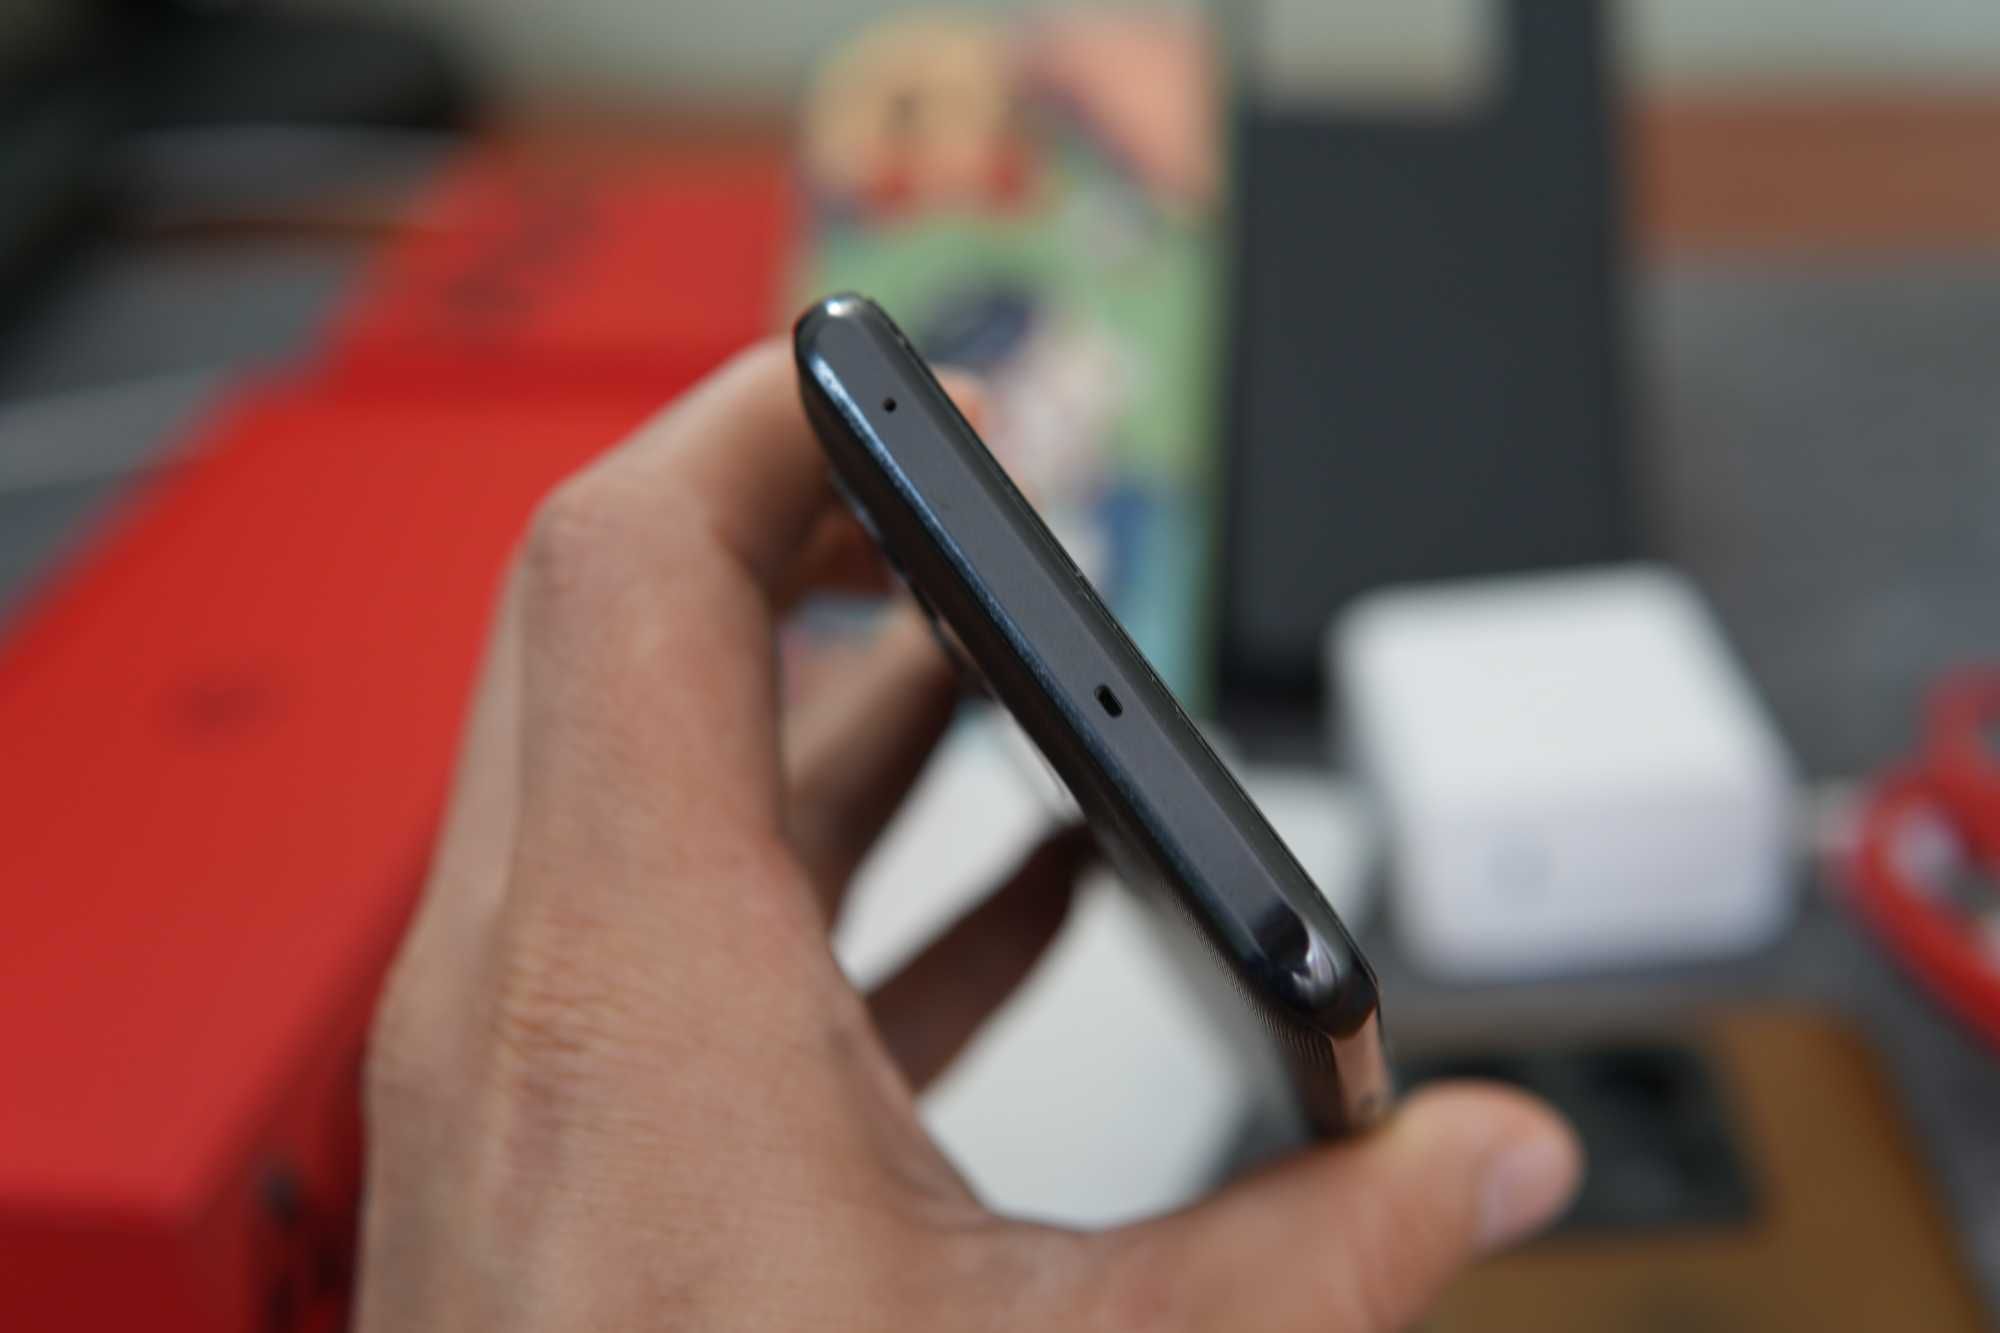 Ace Pro 256GB камерафон 2022 года чистый Android 13, OnePlus 10T Обмен